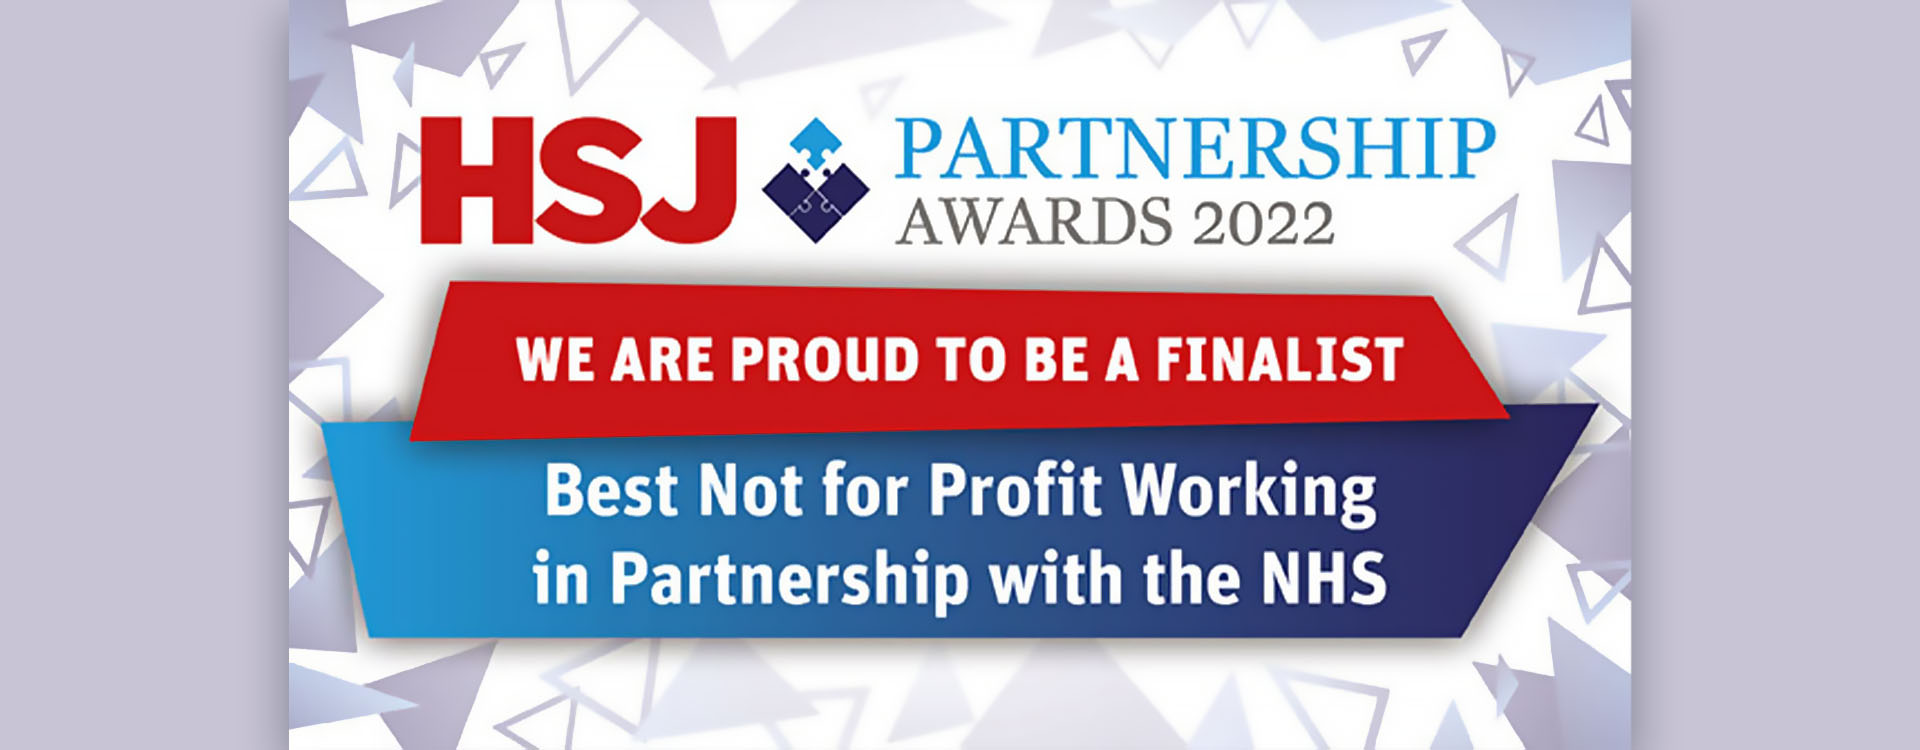 HSJ Partnership Finalist 2022 Homepage